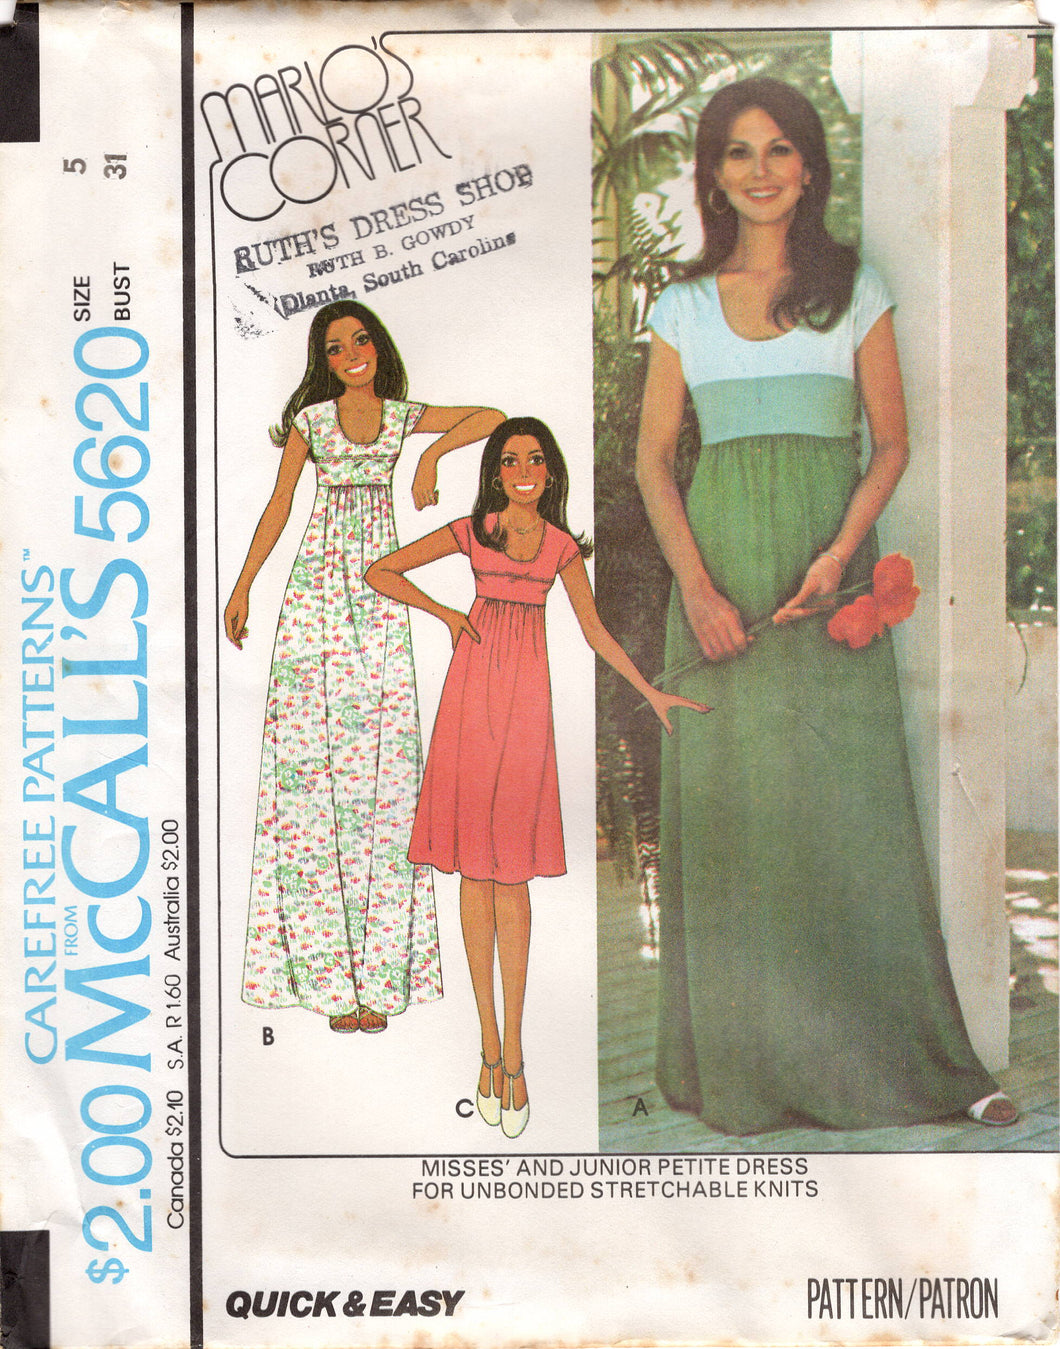 1970's McCall's Color Block Midi or Maxi Dress with Scoop Neckline - Marlo's Corner - Bust 31-36